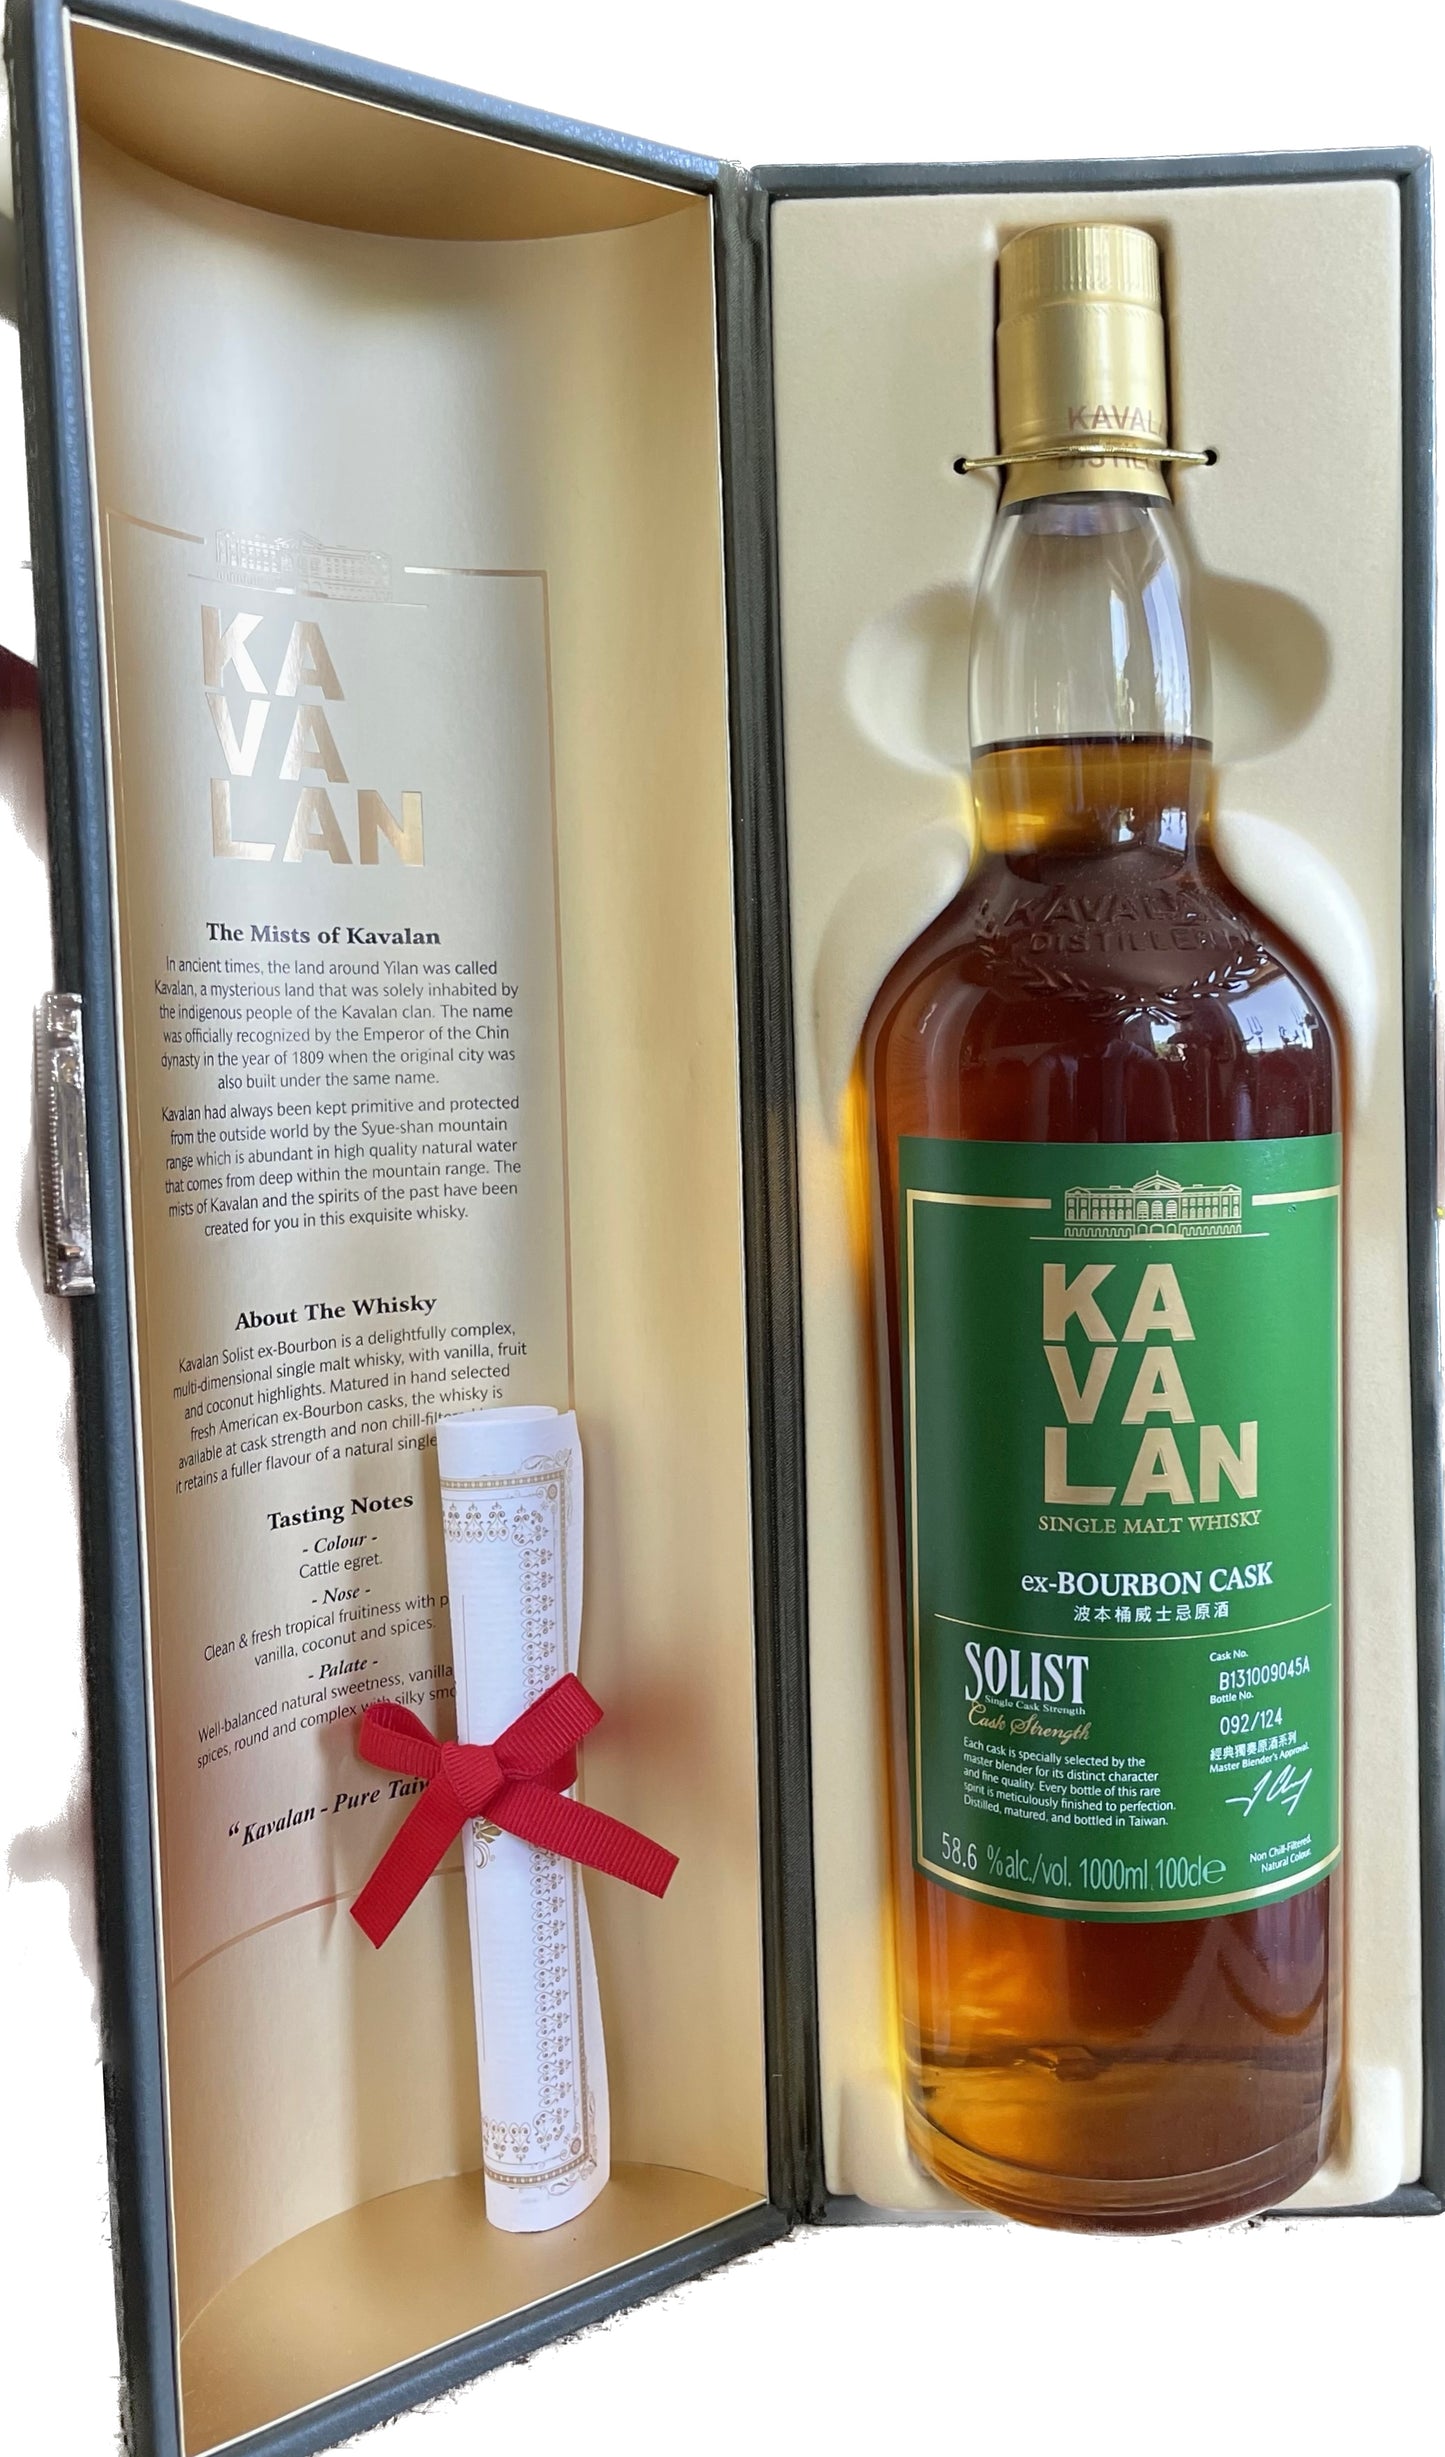 Kavalan Solist ex-Bourbon Cask Whisky